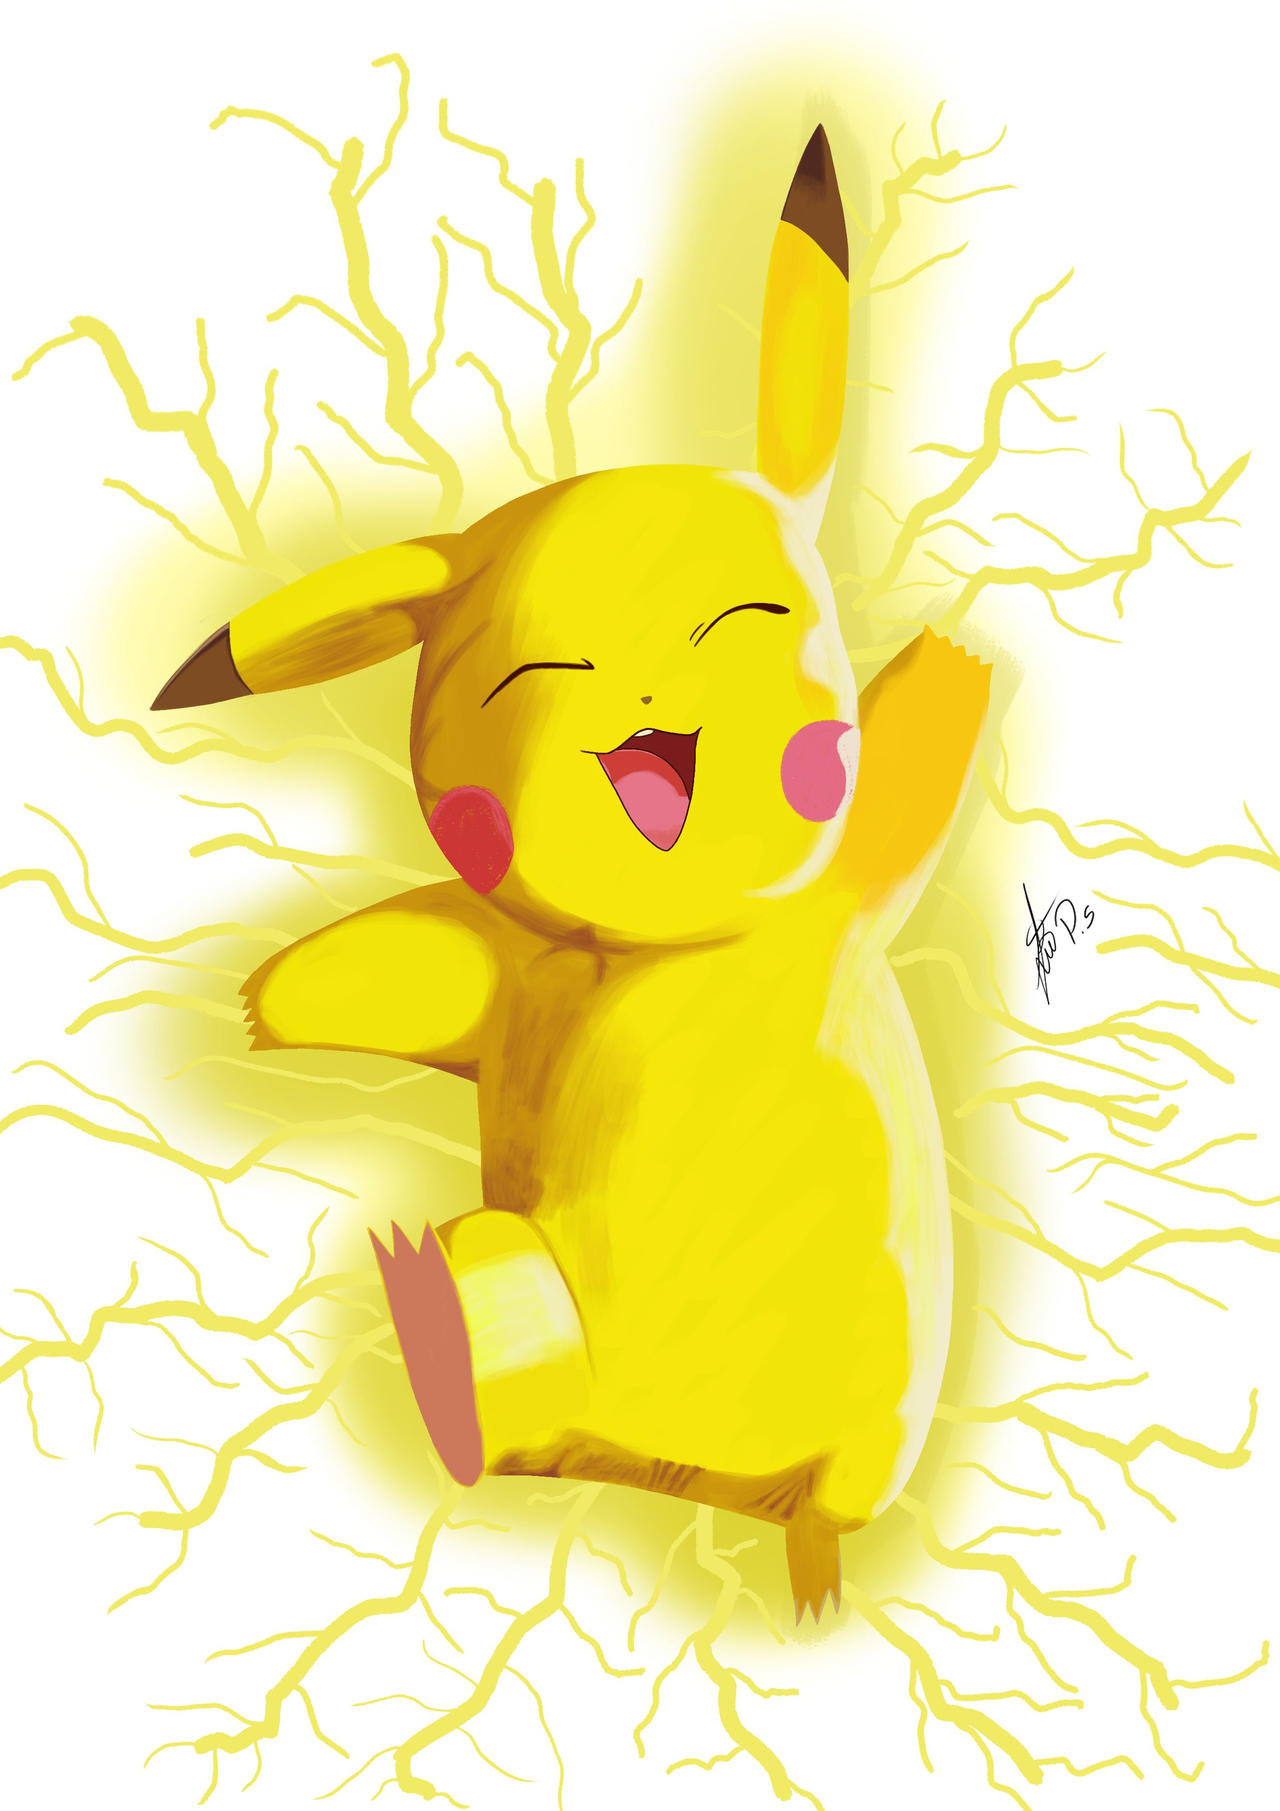 Natures of Pokemon Pikachu style by Puddingpanic on DeviantArt